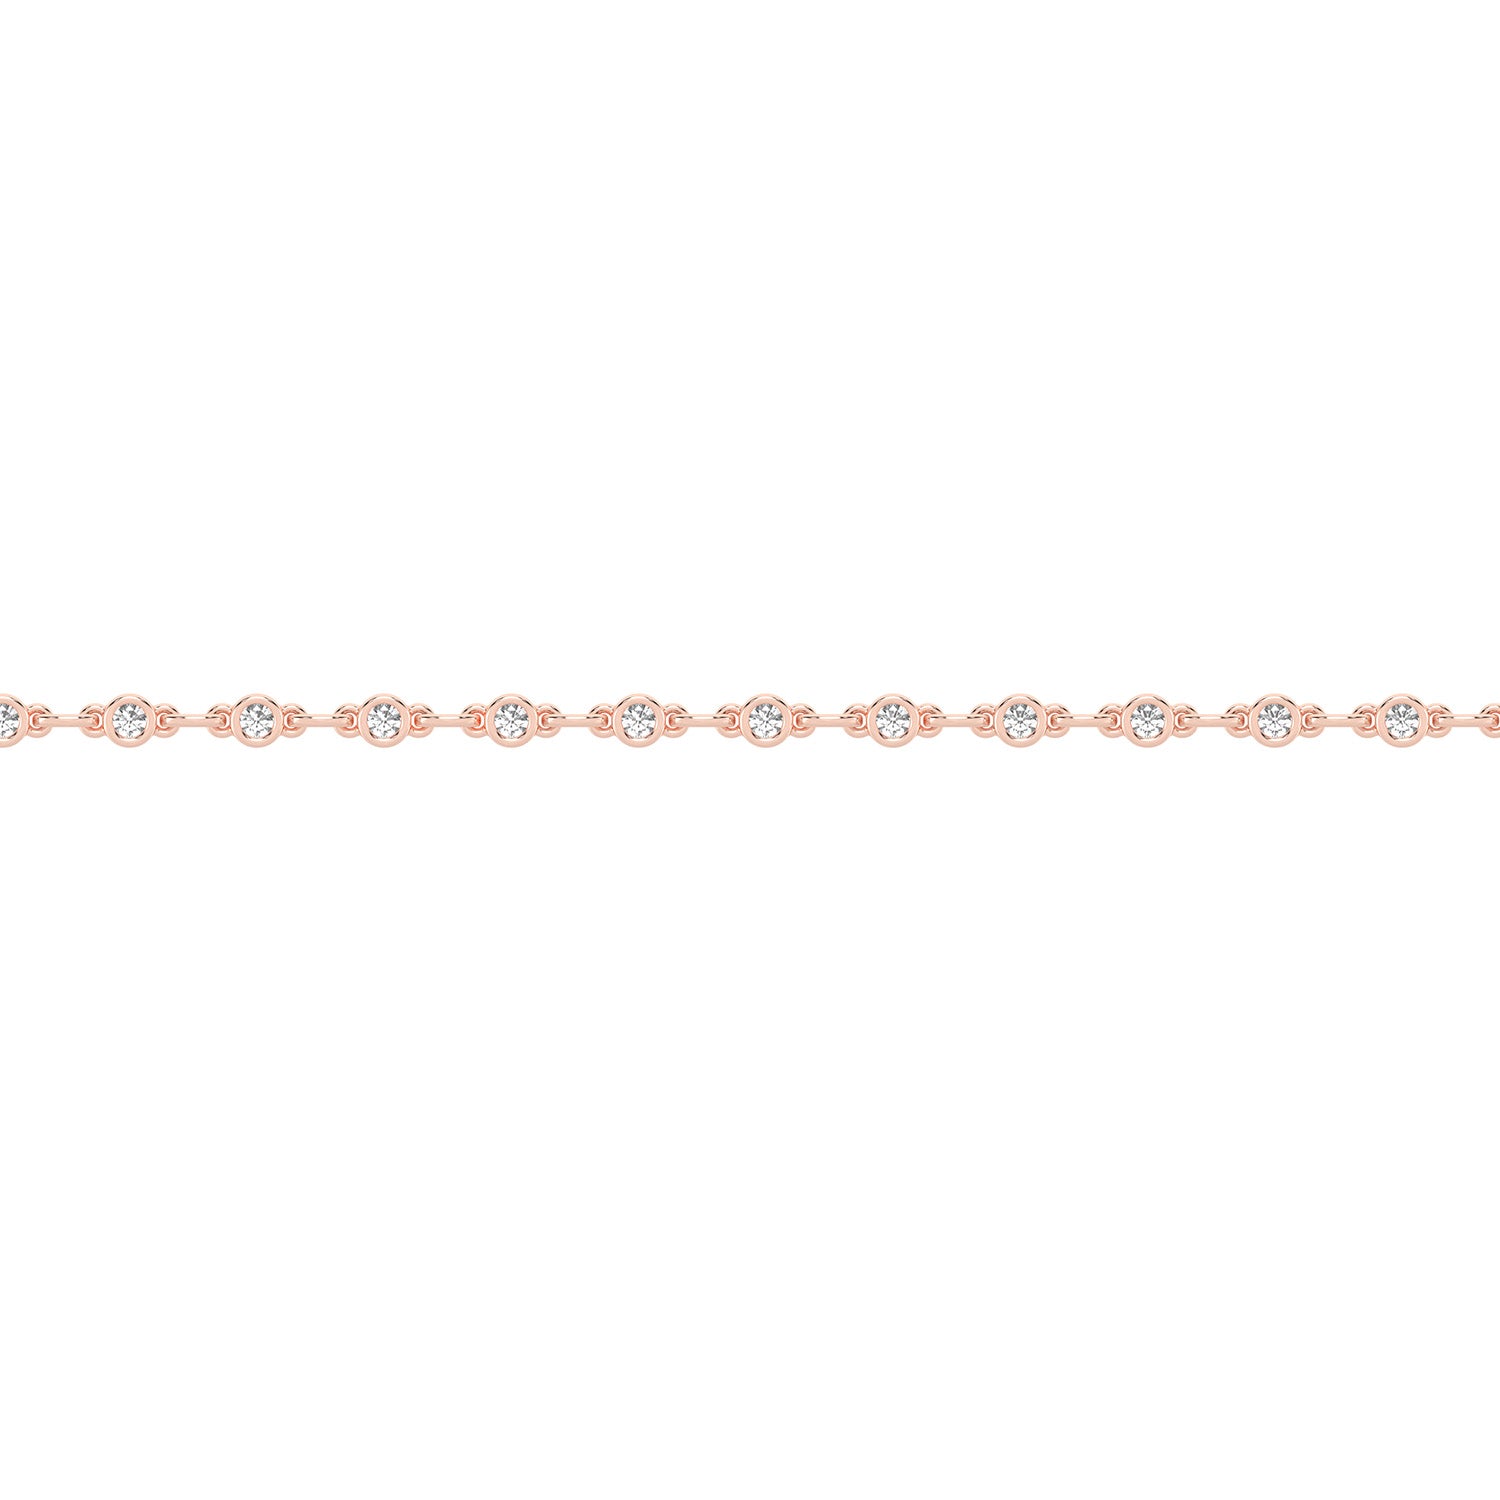 Atmos Bezel Set Diamond Bracelet_Product Angle_1/2 - 3